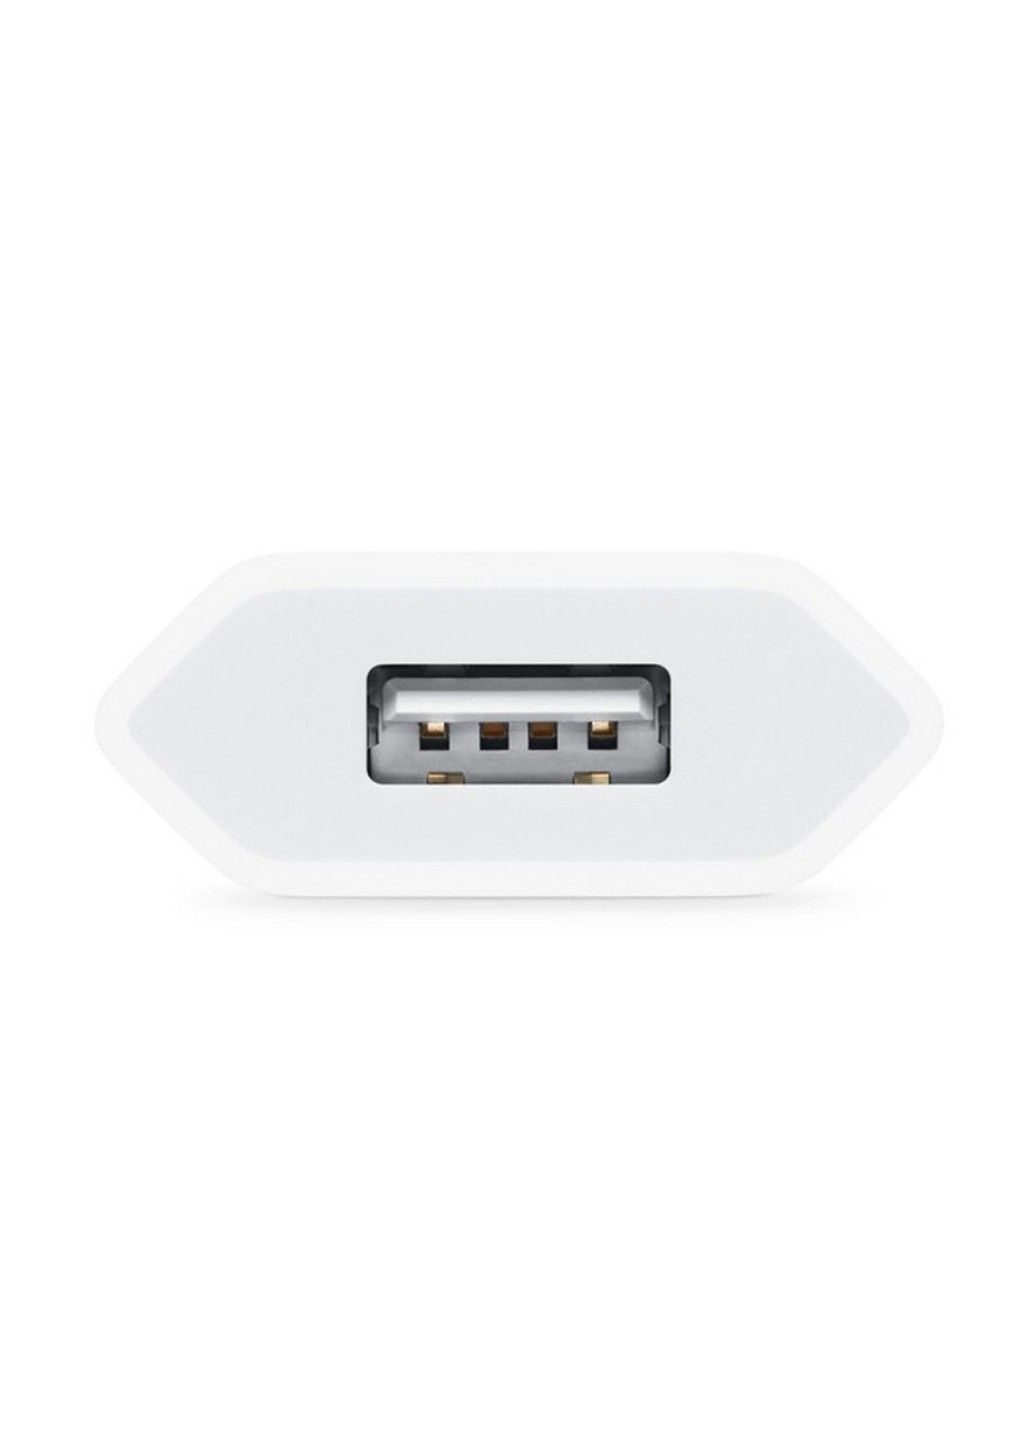 МЗП 5W USB-A Power Adapter for Apple (AAA) (box) Brand_A_Class (291879652)